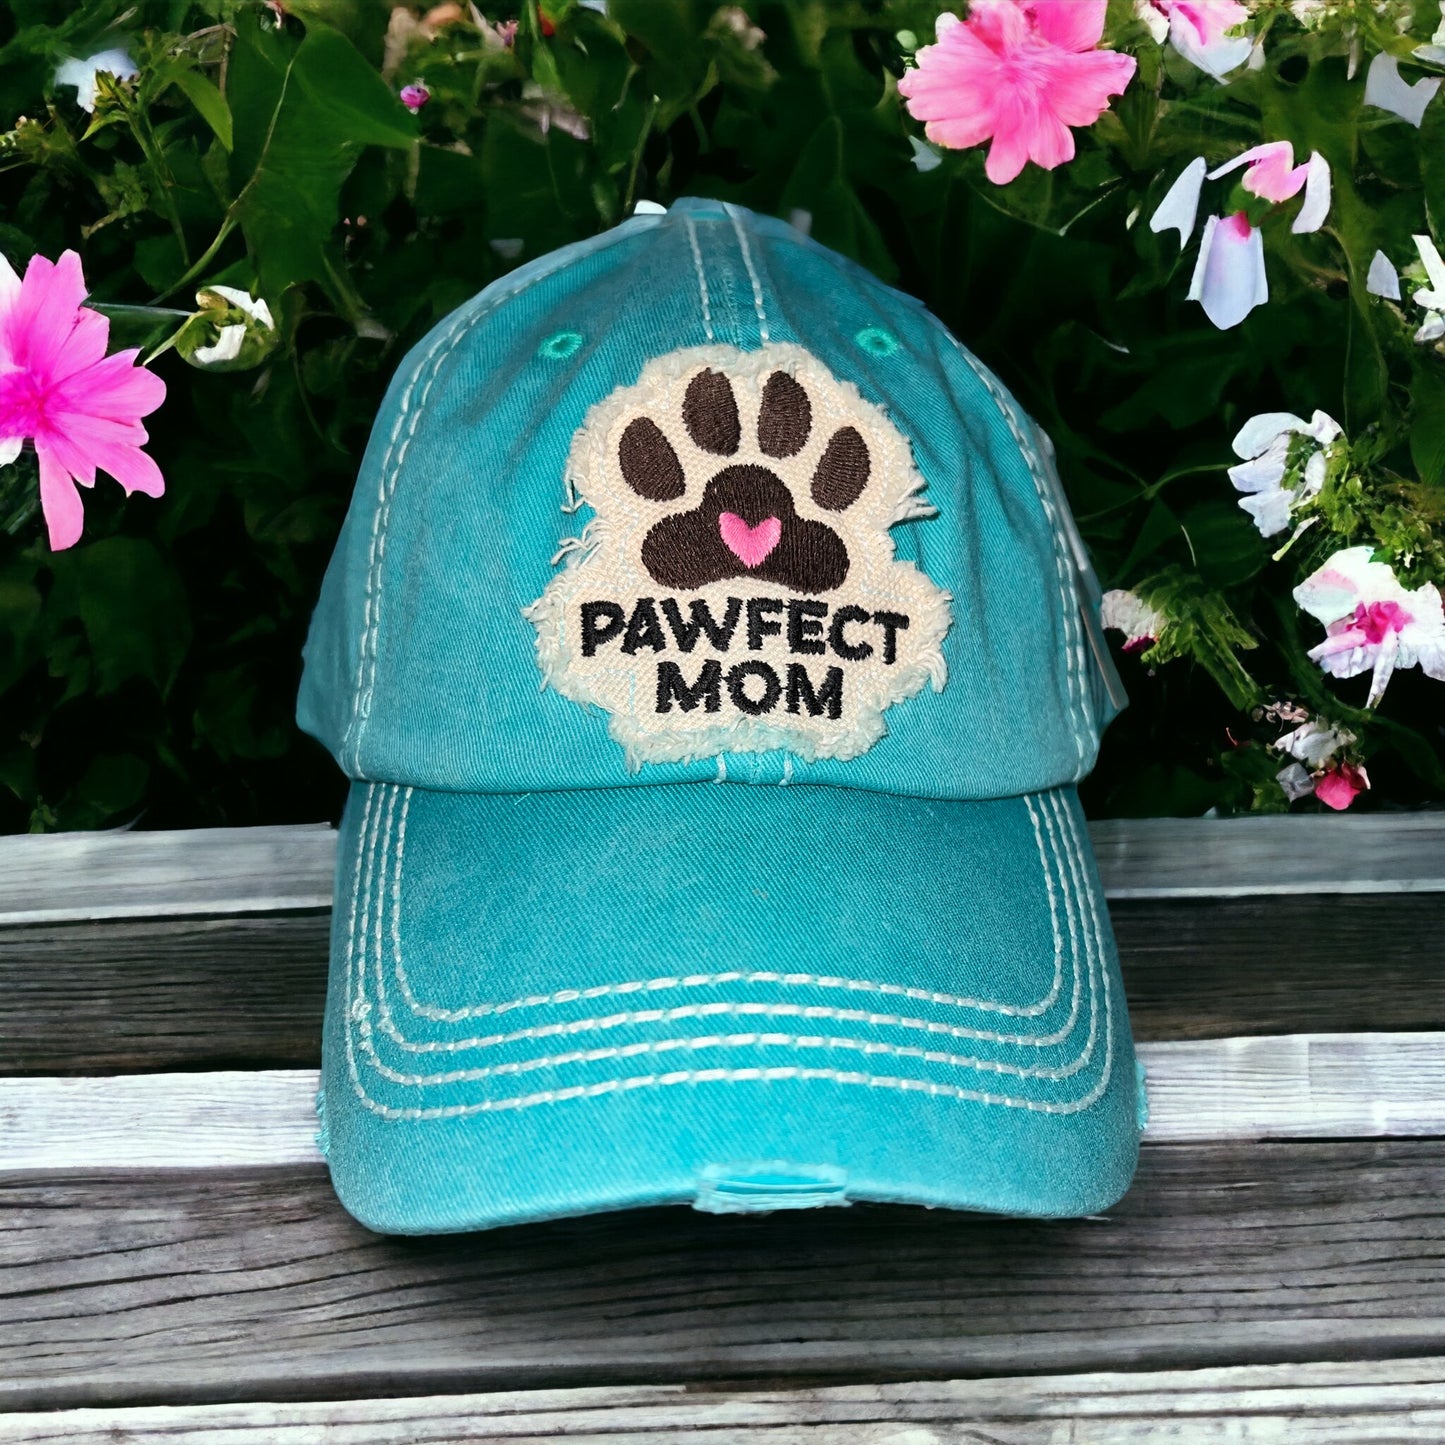 “Pawfect Mom” Cap